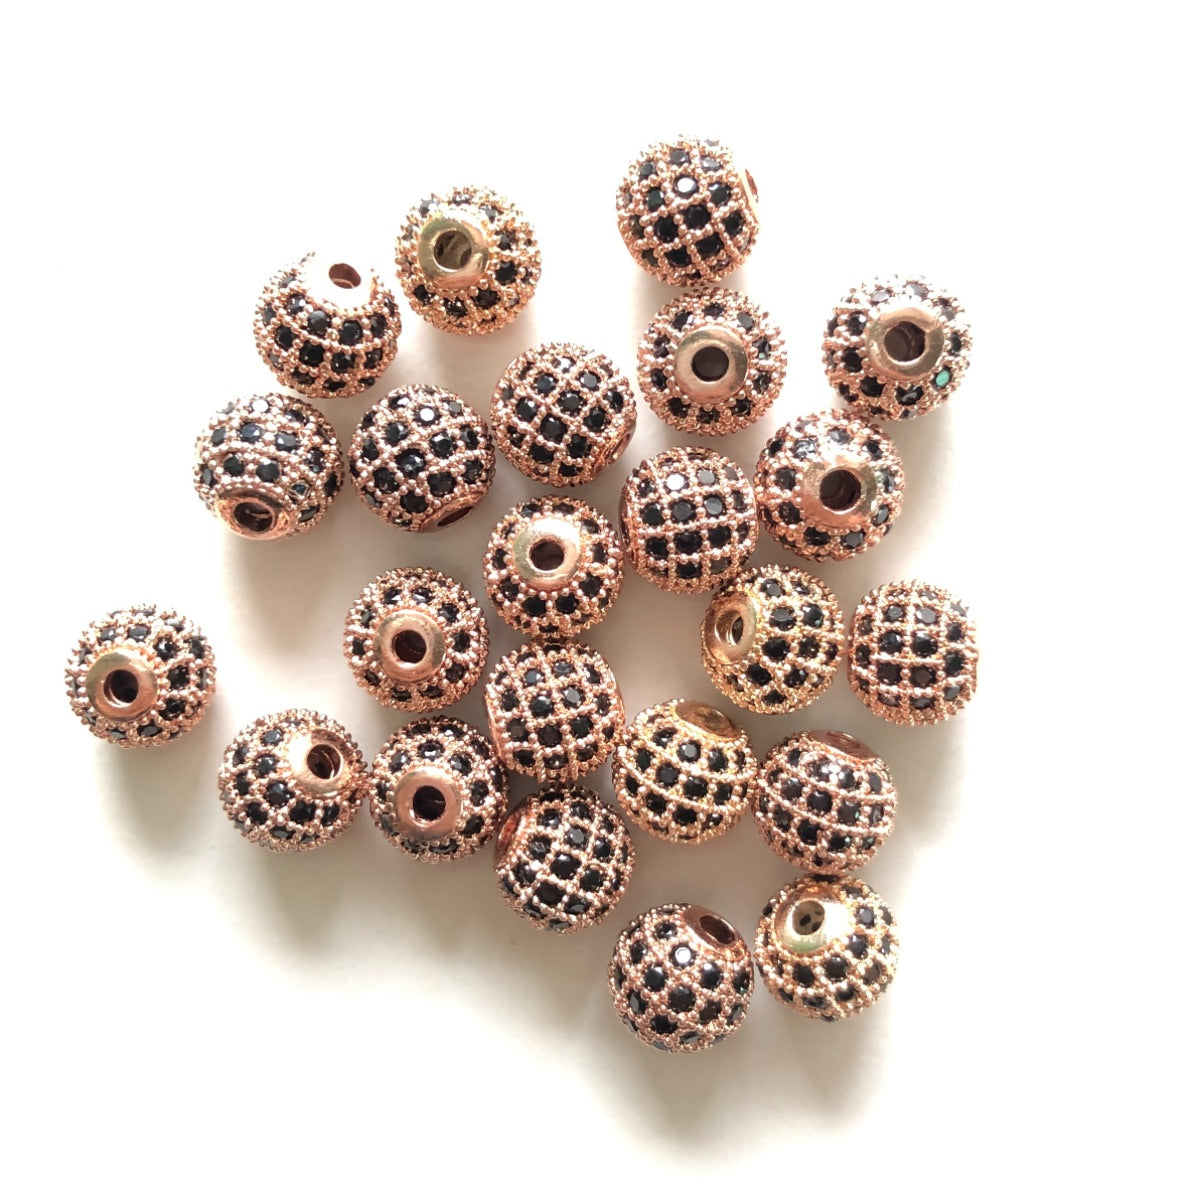 20pcs/lot 8mm Black CZ Paved Ball Spacers Rose Gold CZ Paved Spacers 8mm Beads Ball Beads Charms Beads Beyond